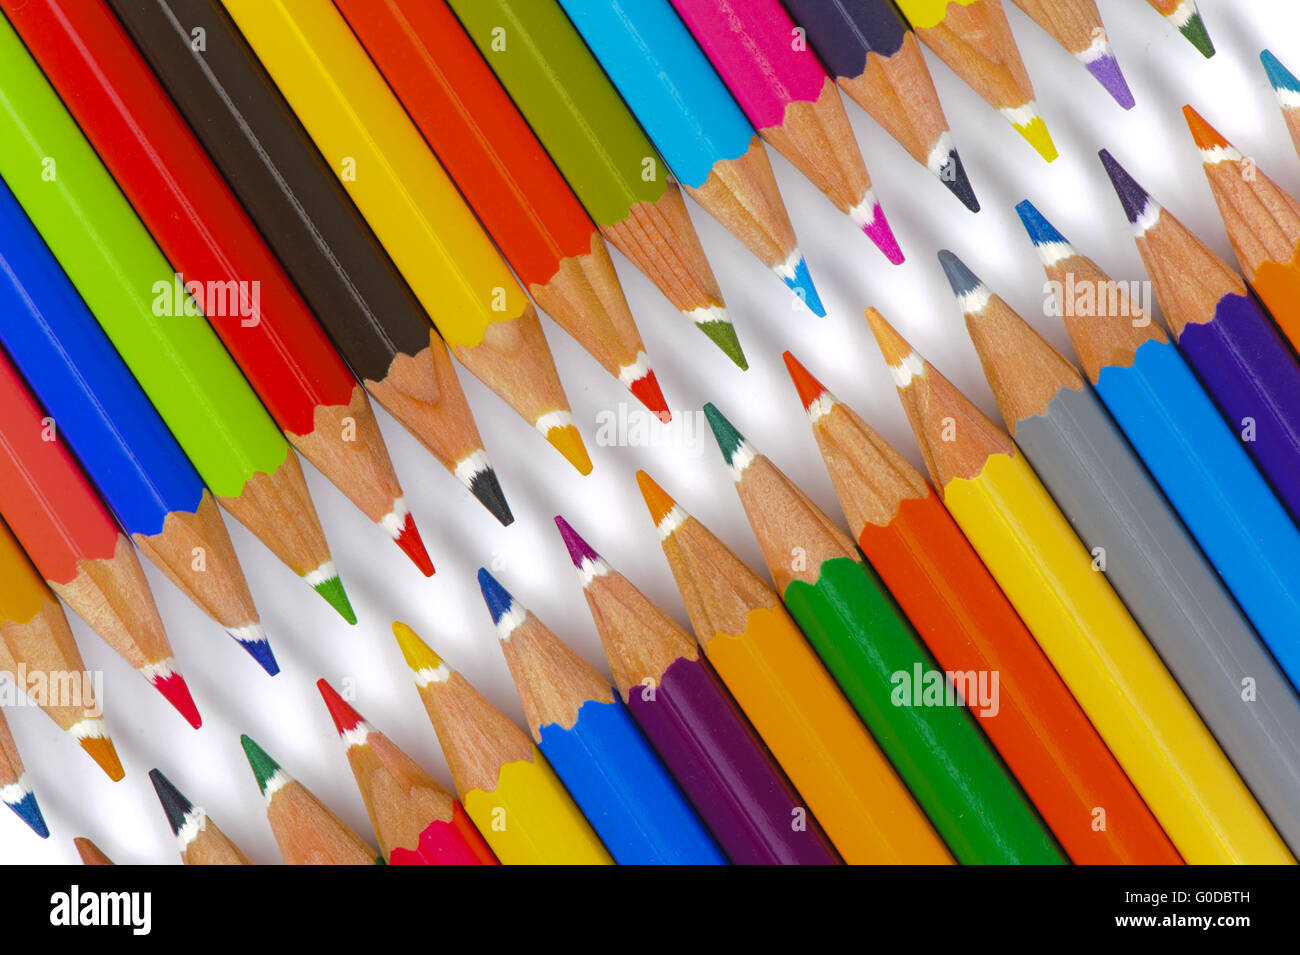 crayons show symbolic teamwork Stock Photo - Alamy